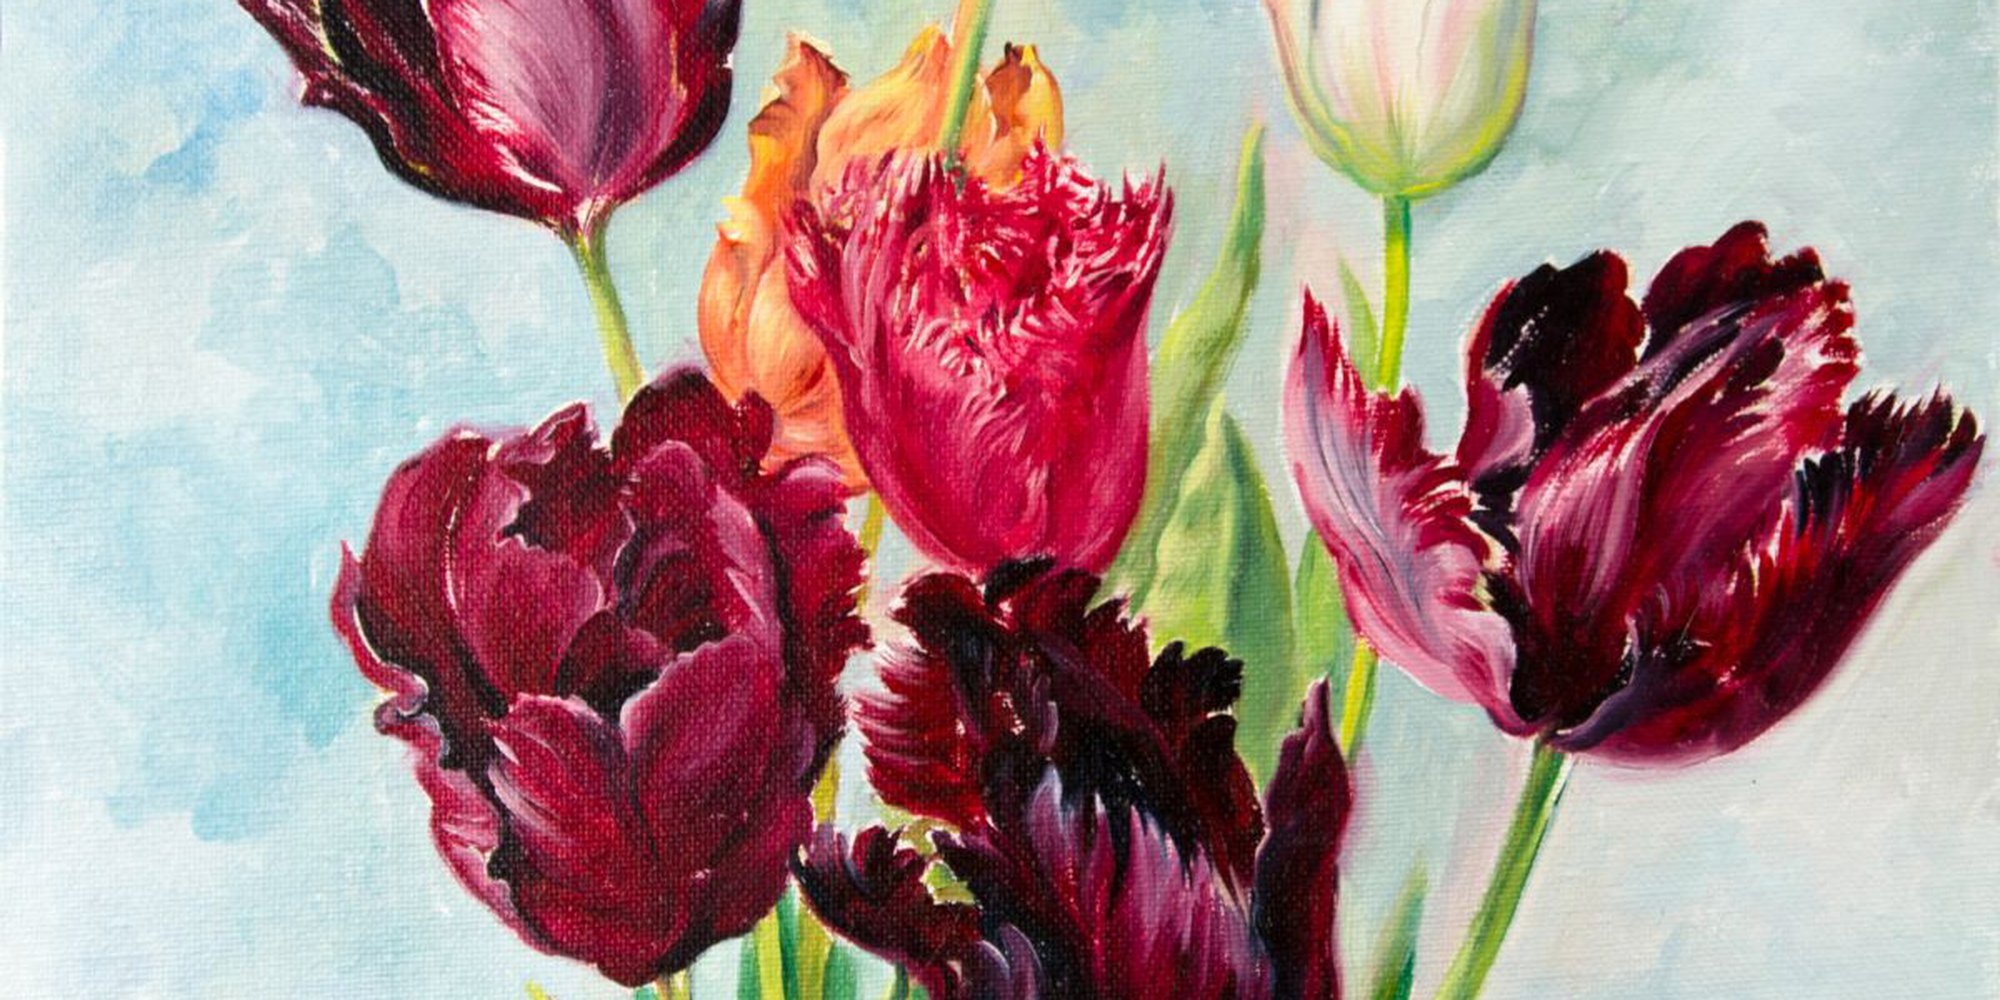 Art of the Day: "Tulips, 2015" by Daria Galinski